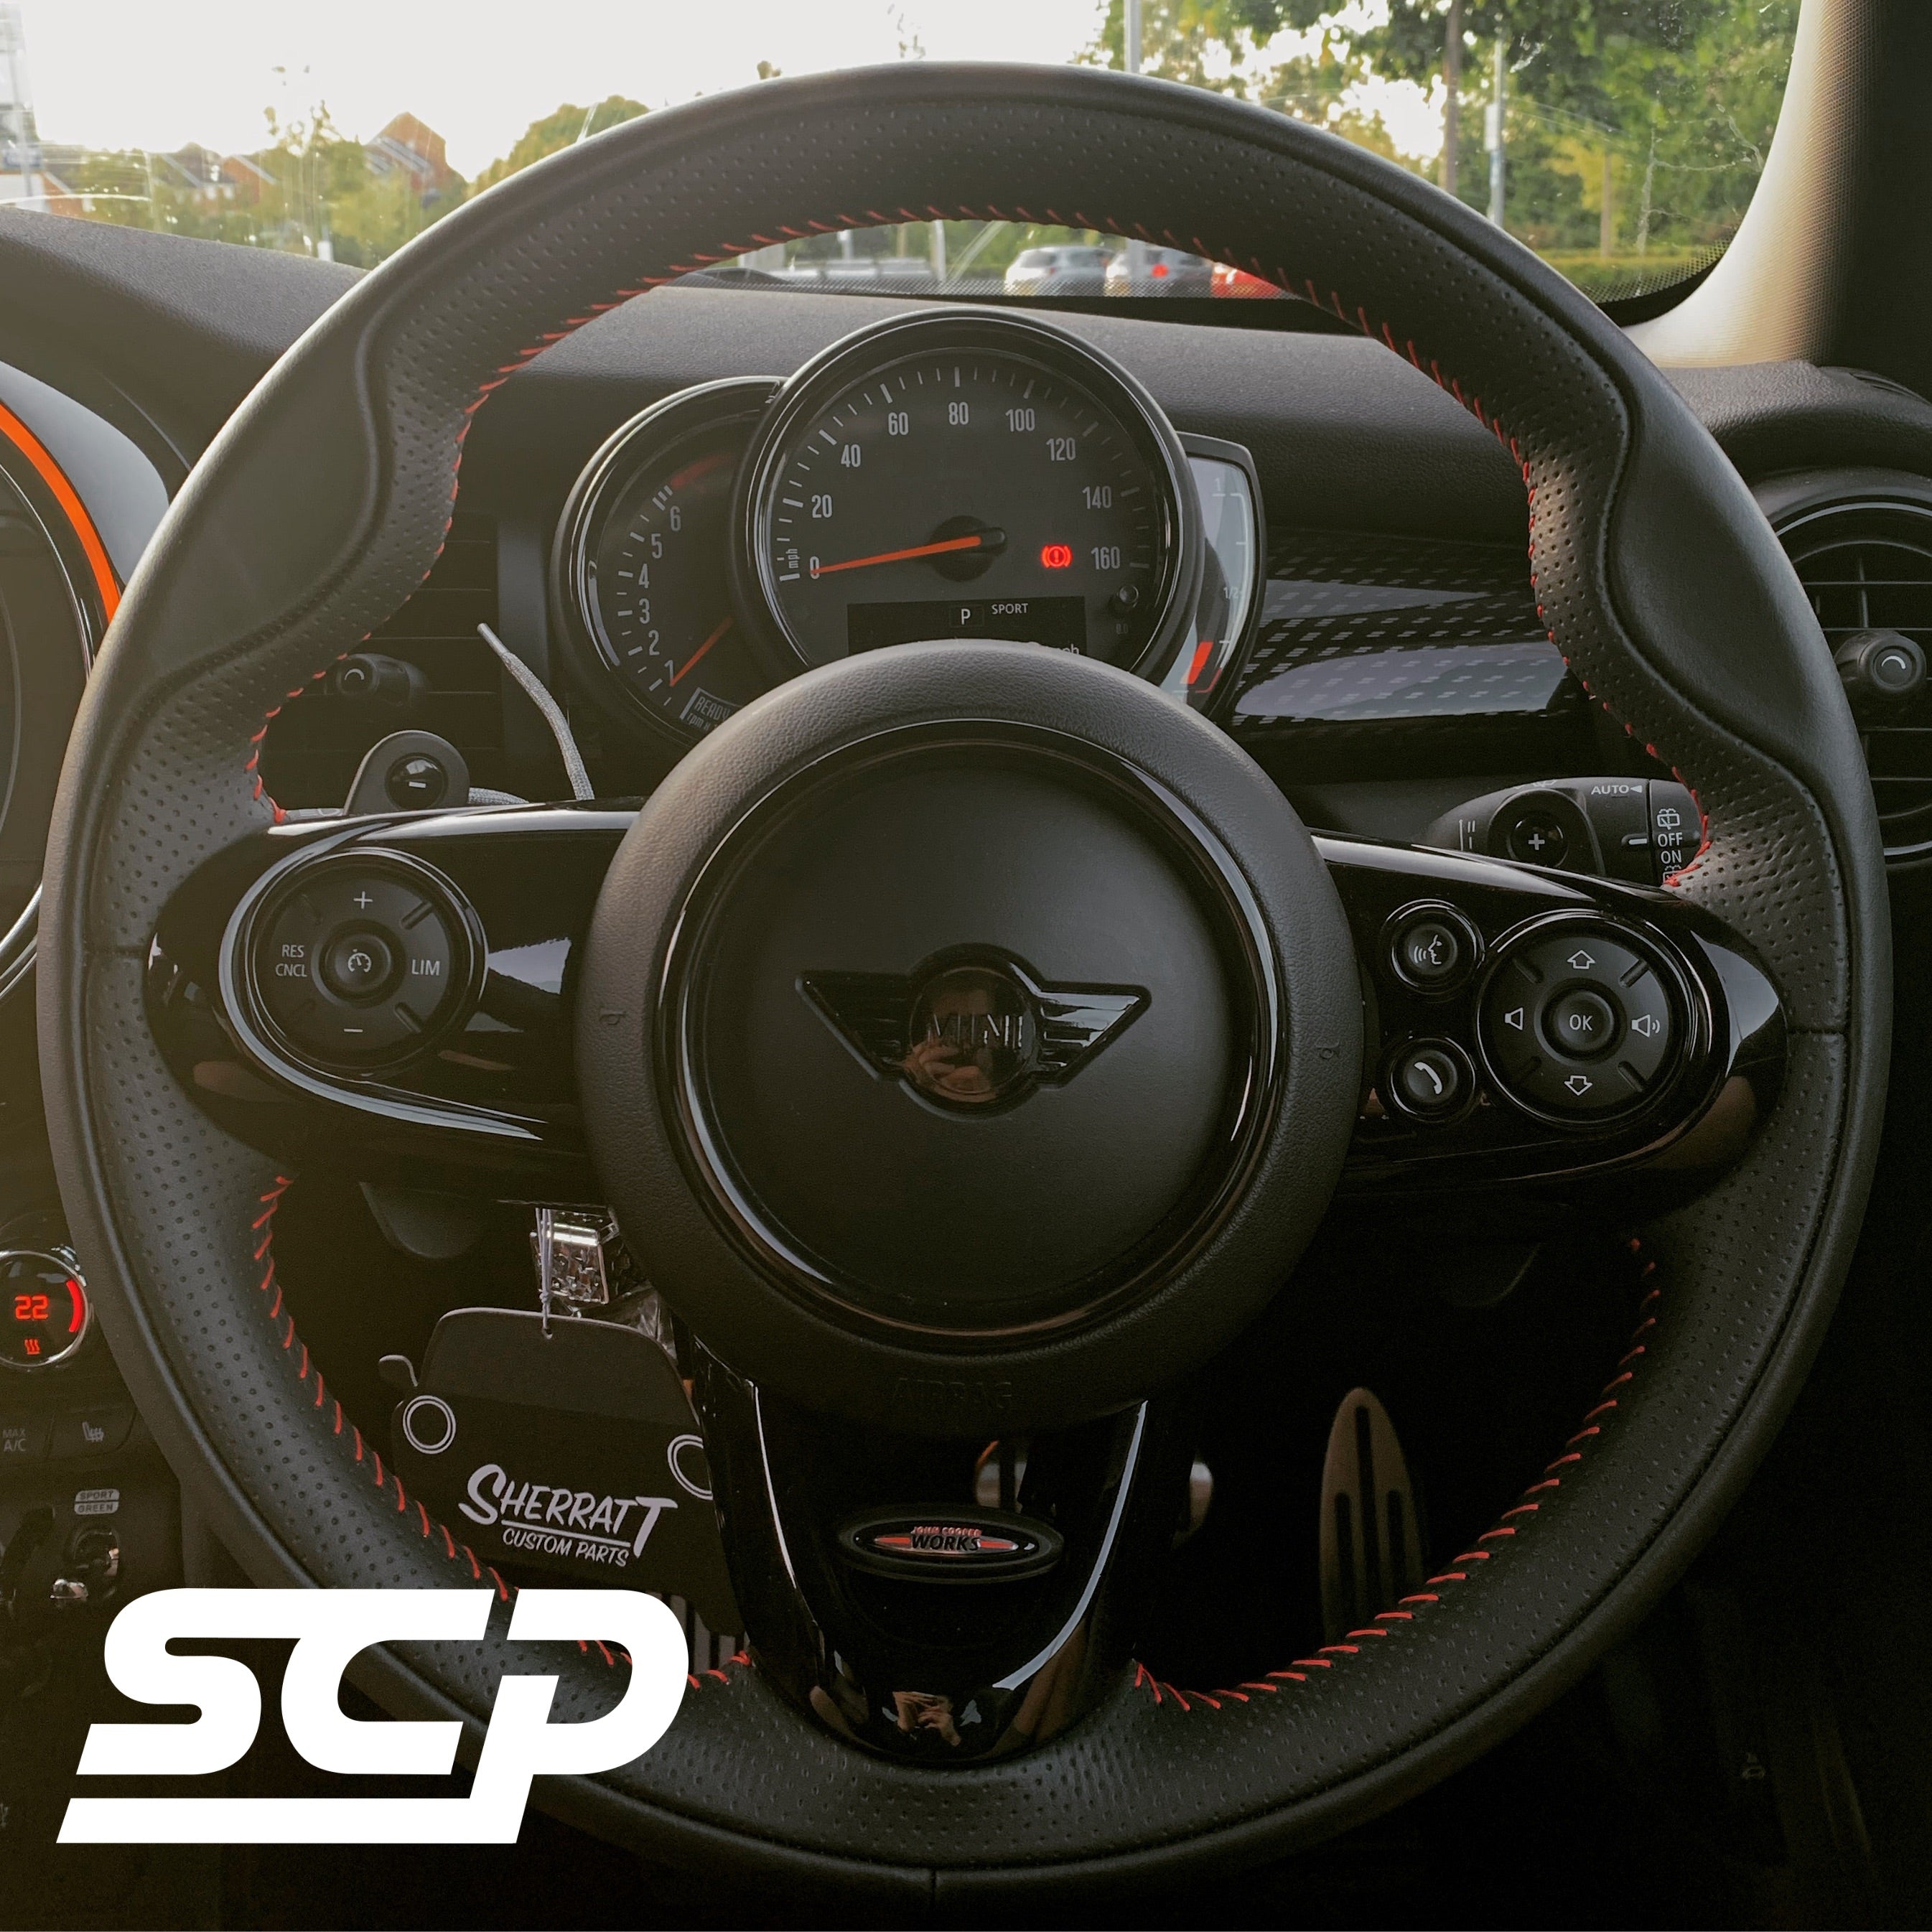 MINI Steering Wheel Decal - SCP Automotive